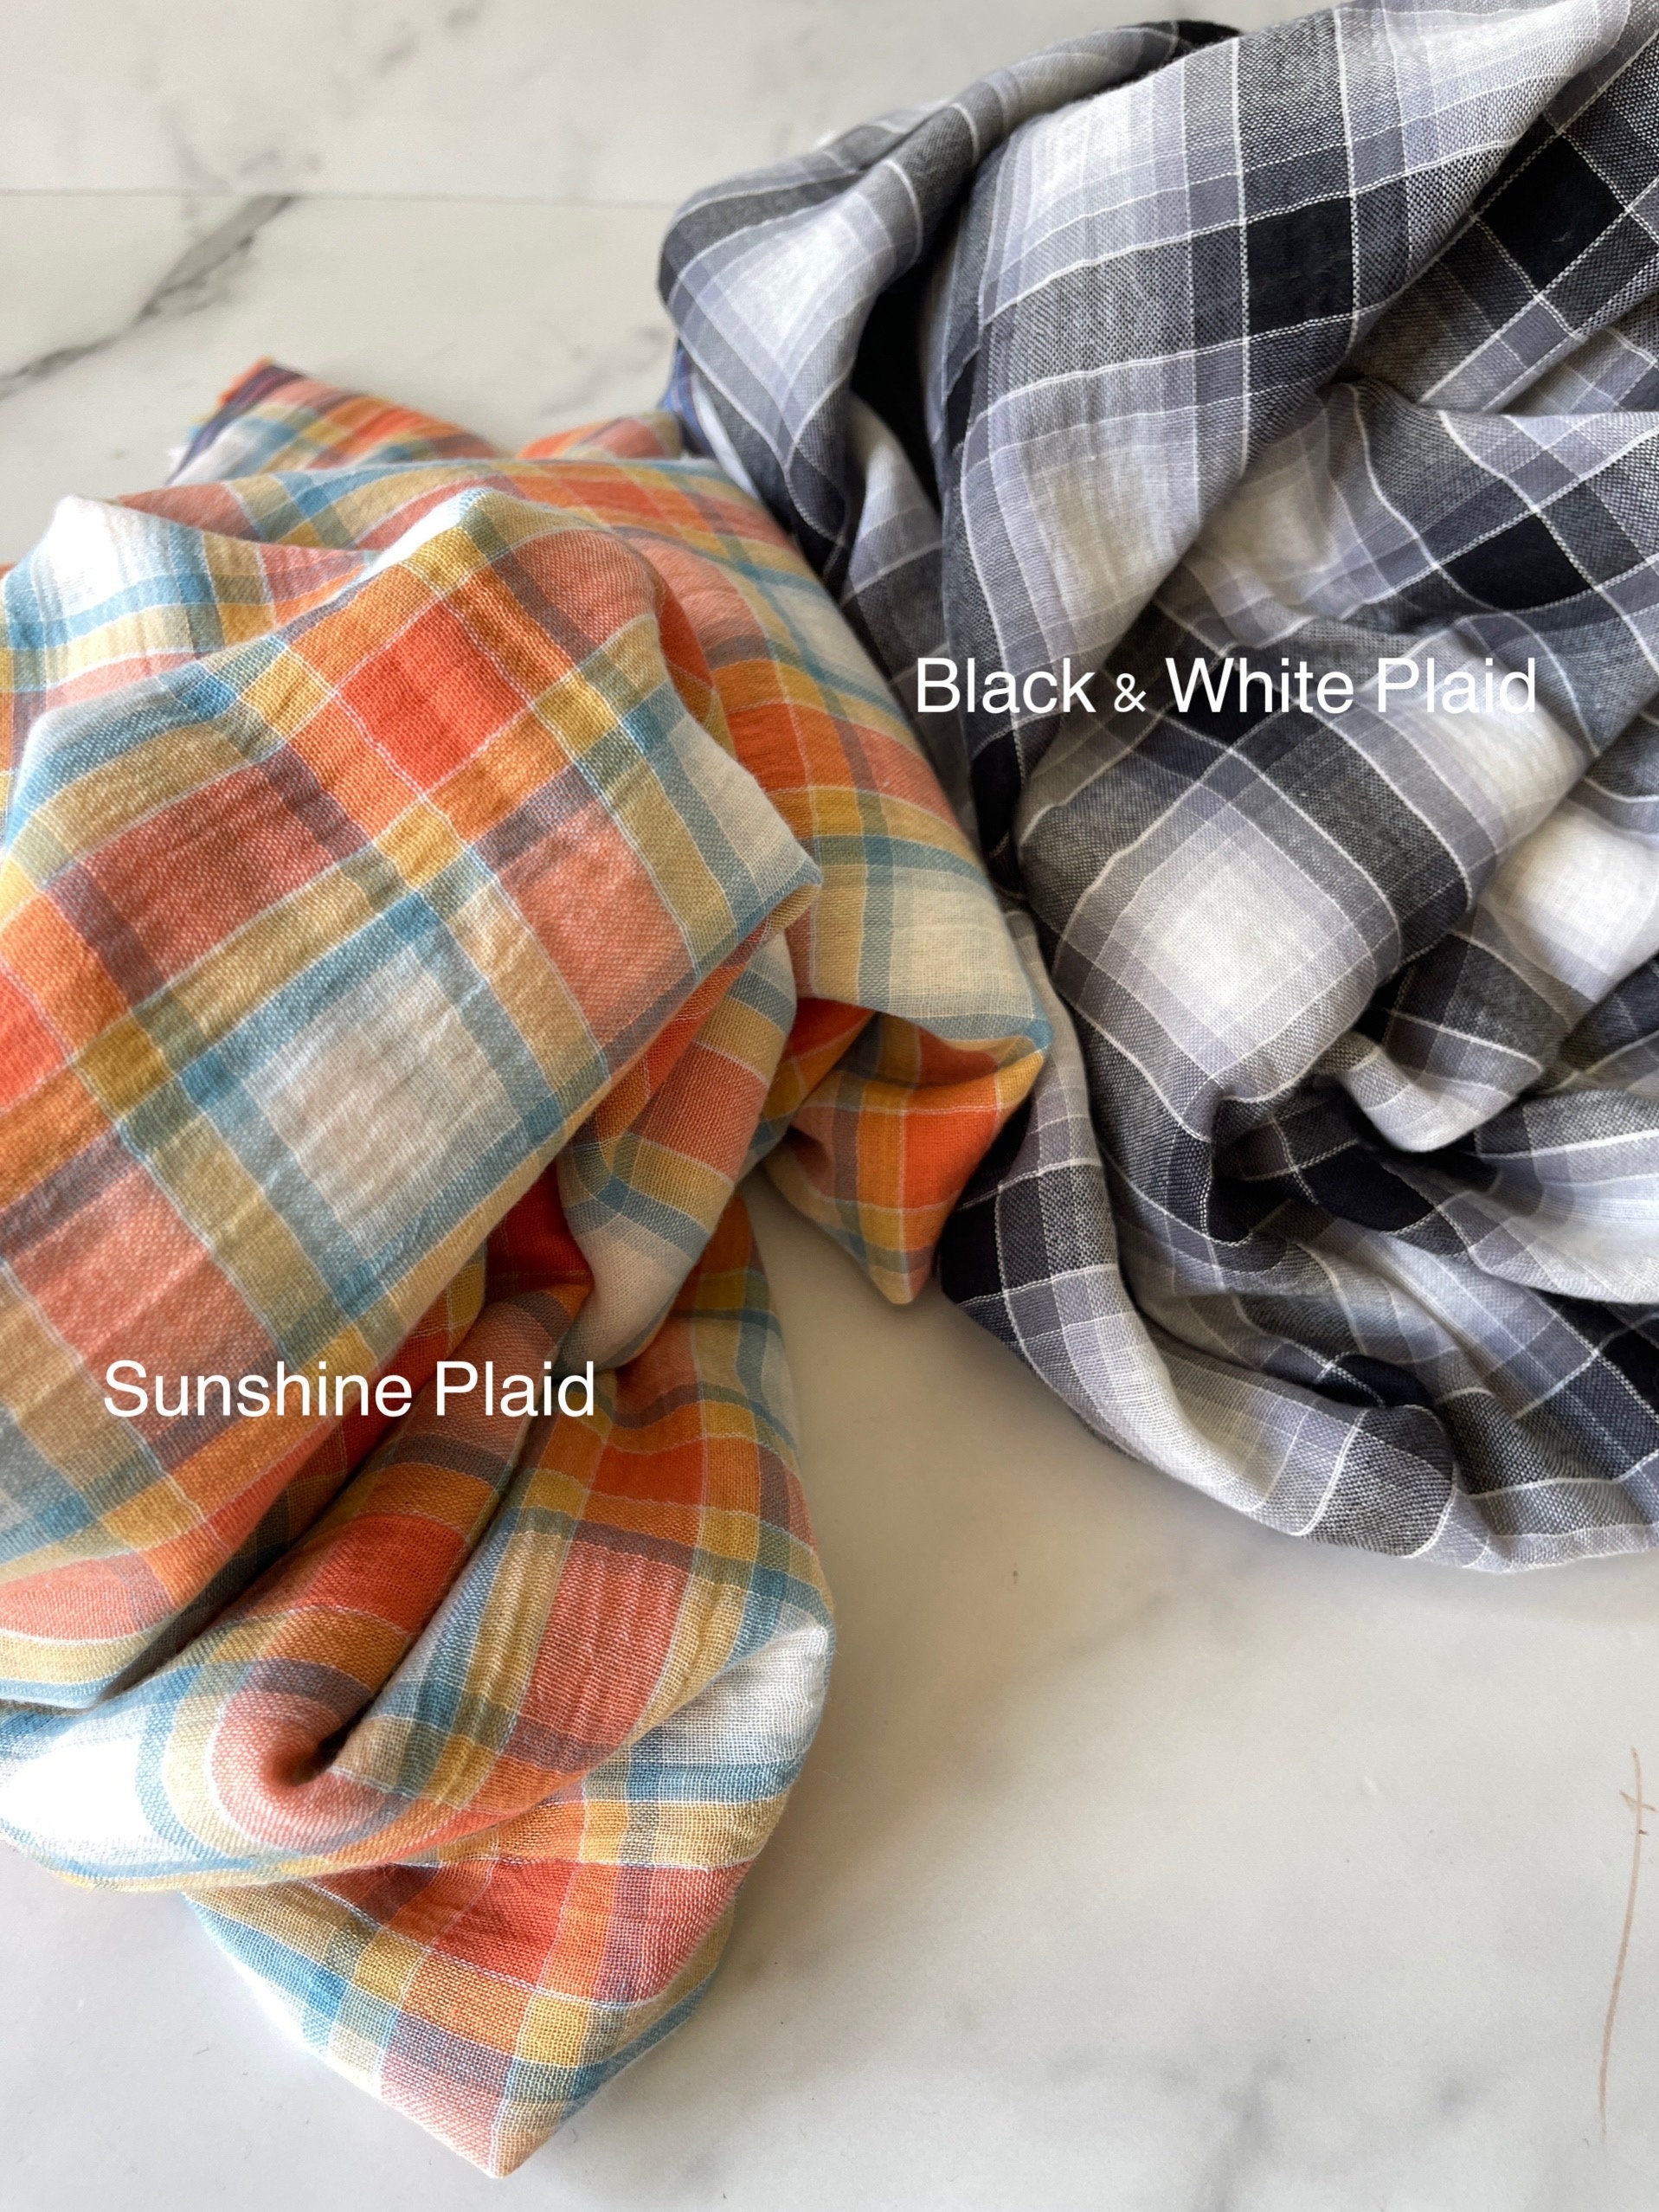 Cotton Plaid Muslin Fabric by The Yard - Blouse Shirt Dress Fabric for  Sewing Clothing - Sunshine Plaid CN27, Black White plaid CN 37